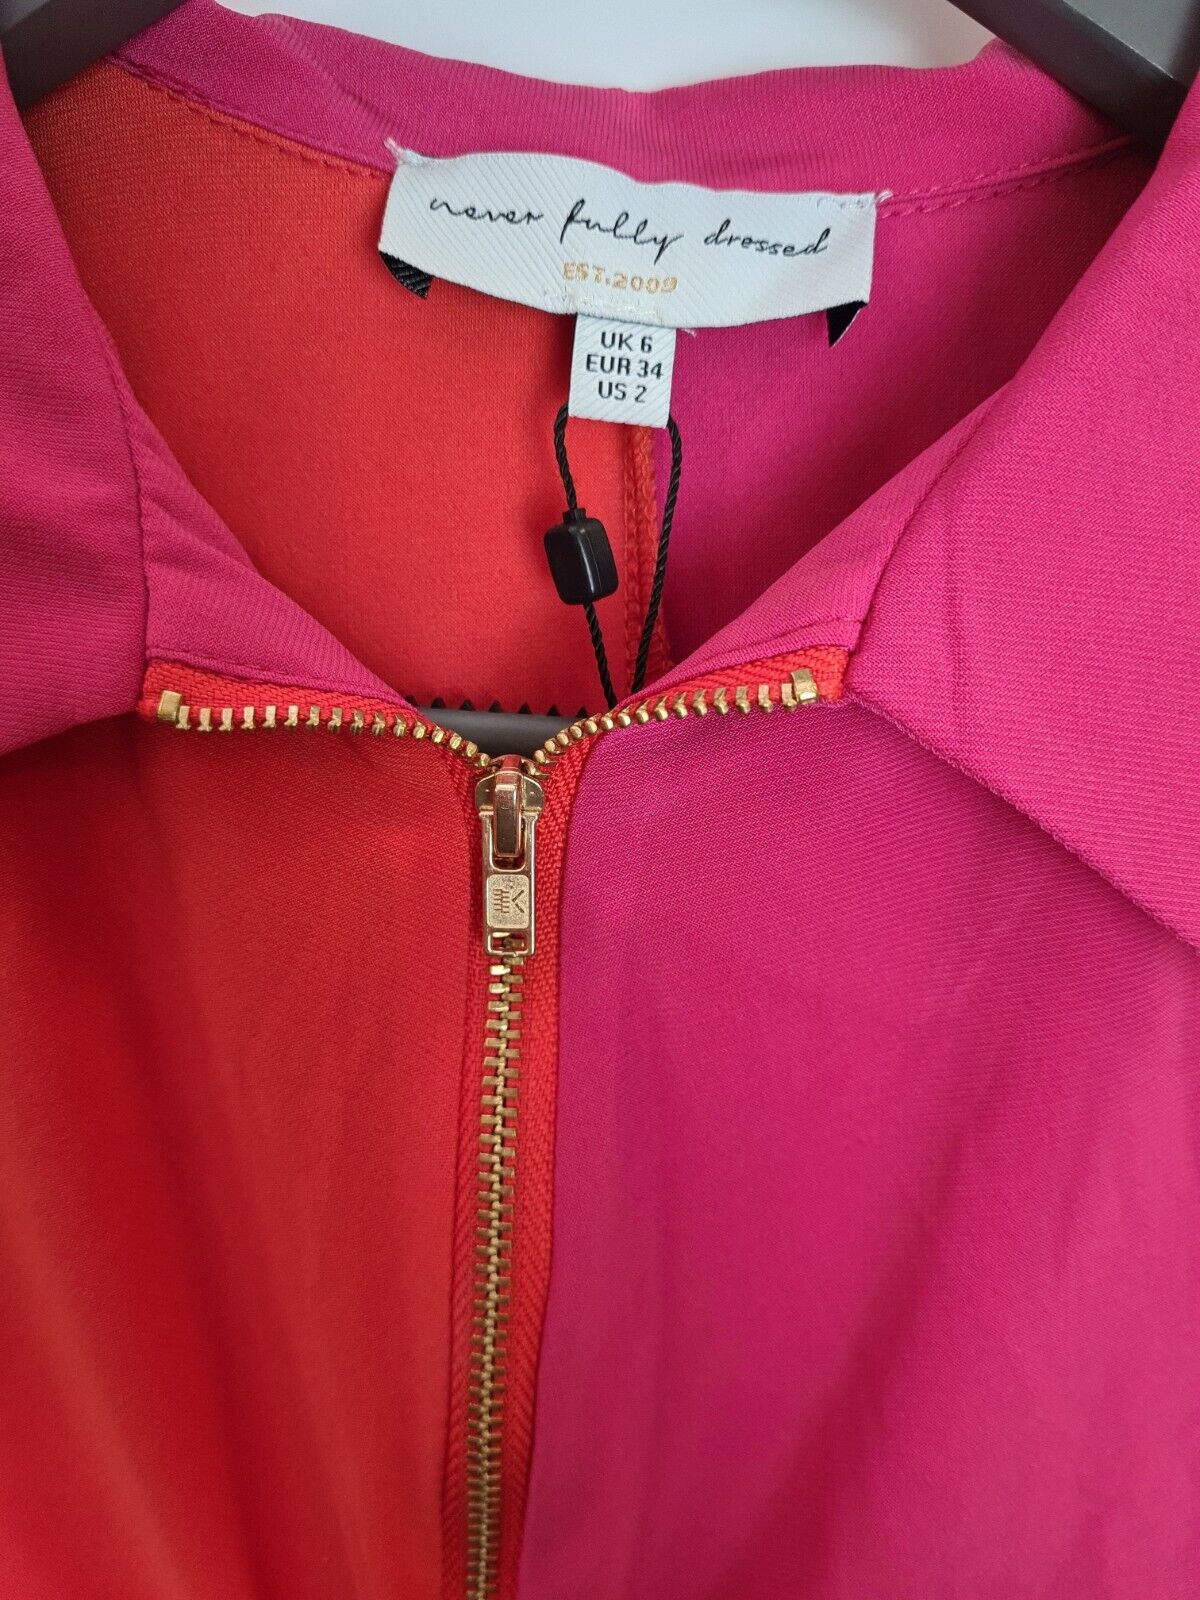 Never Fully Dressed Pink And Orange Colour Block Dress Size UK 6 **** V211